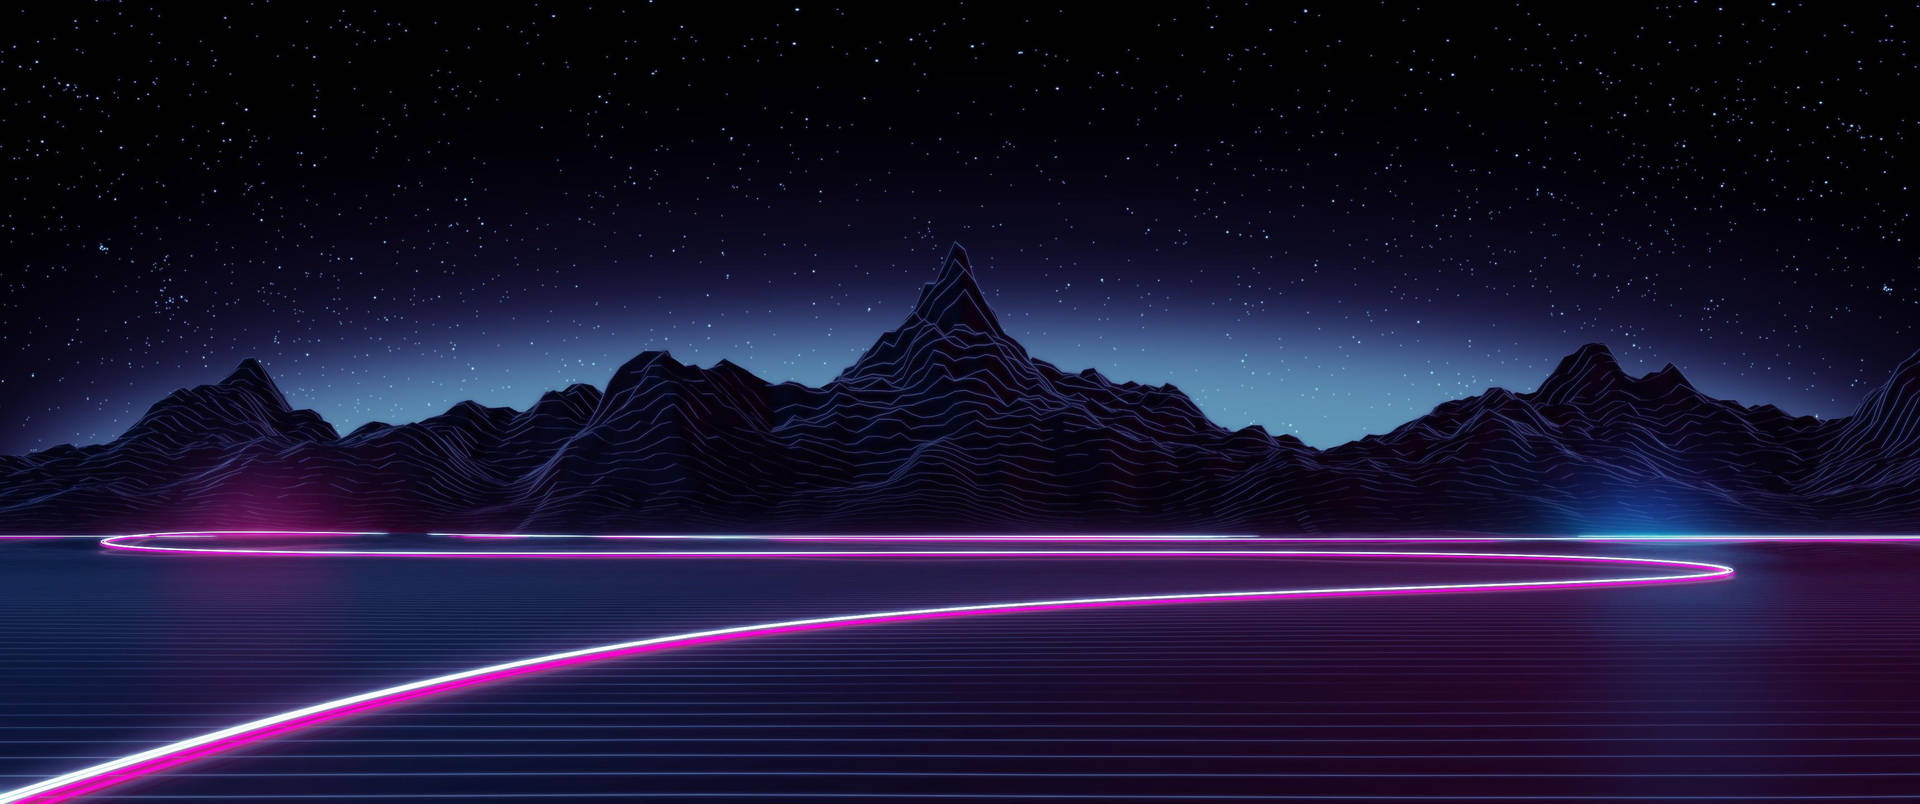 Neon Aesthetic Tumblr Mountain Scenery